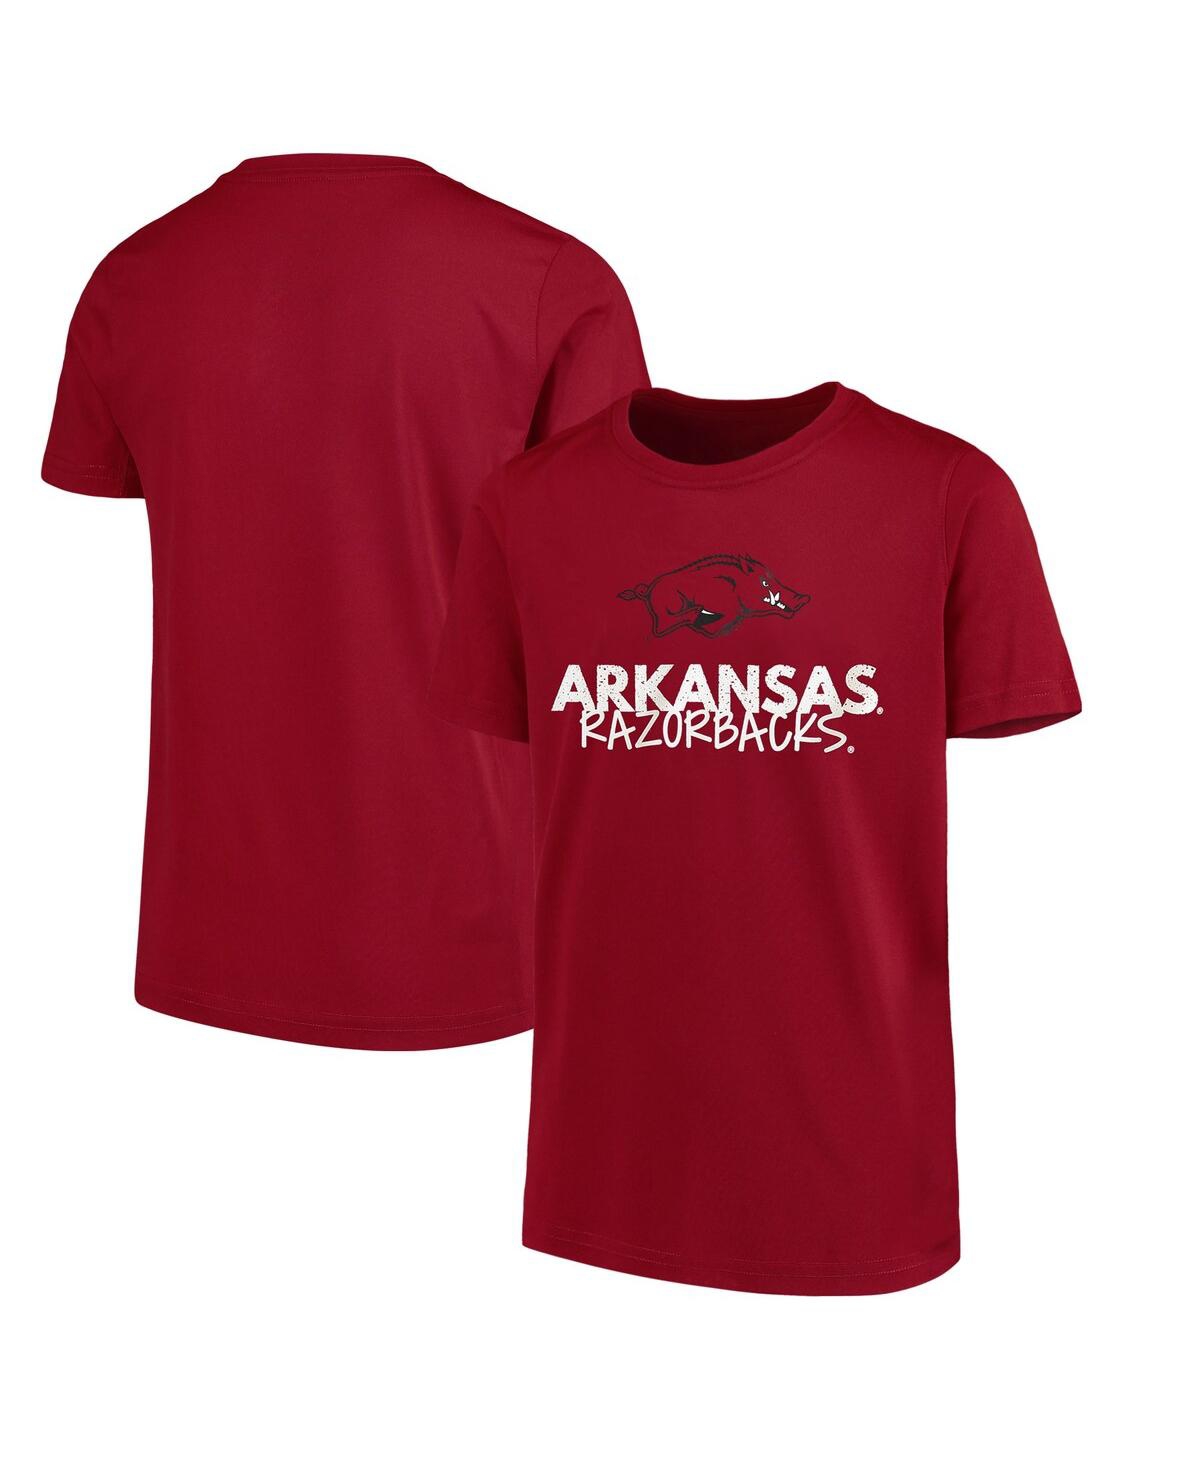 Two Feet Ahead Kids' Big Boys Cardinal Arkansas Razorbacks Crew Neck T-shirt